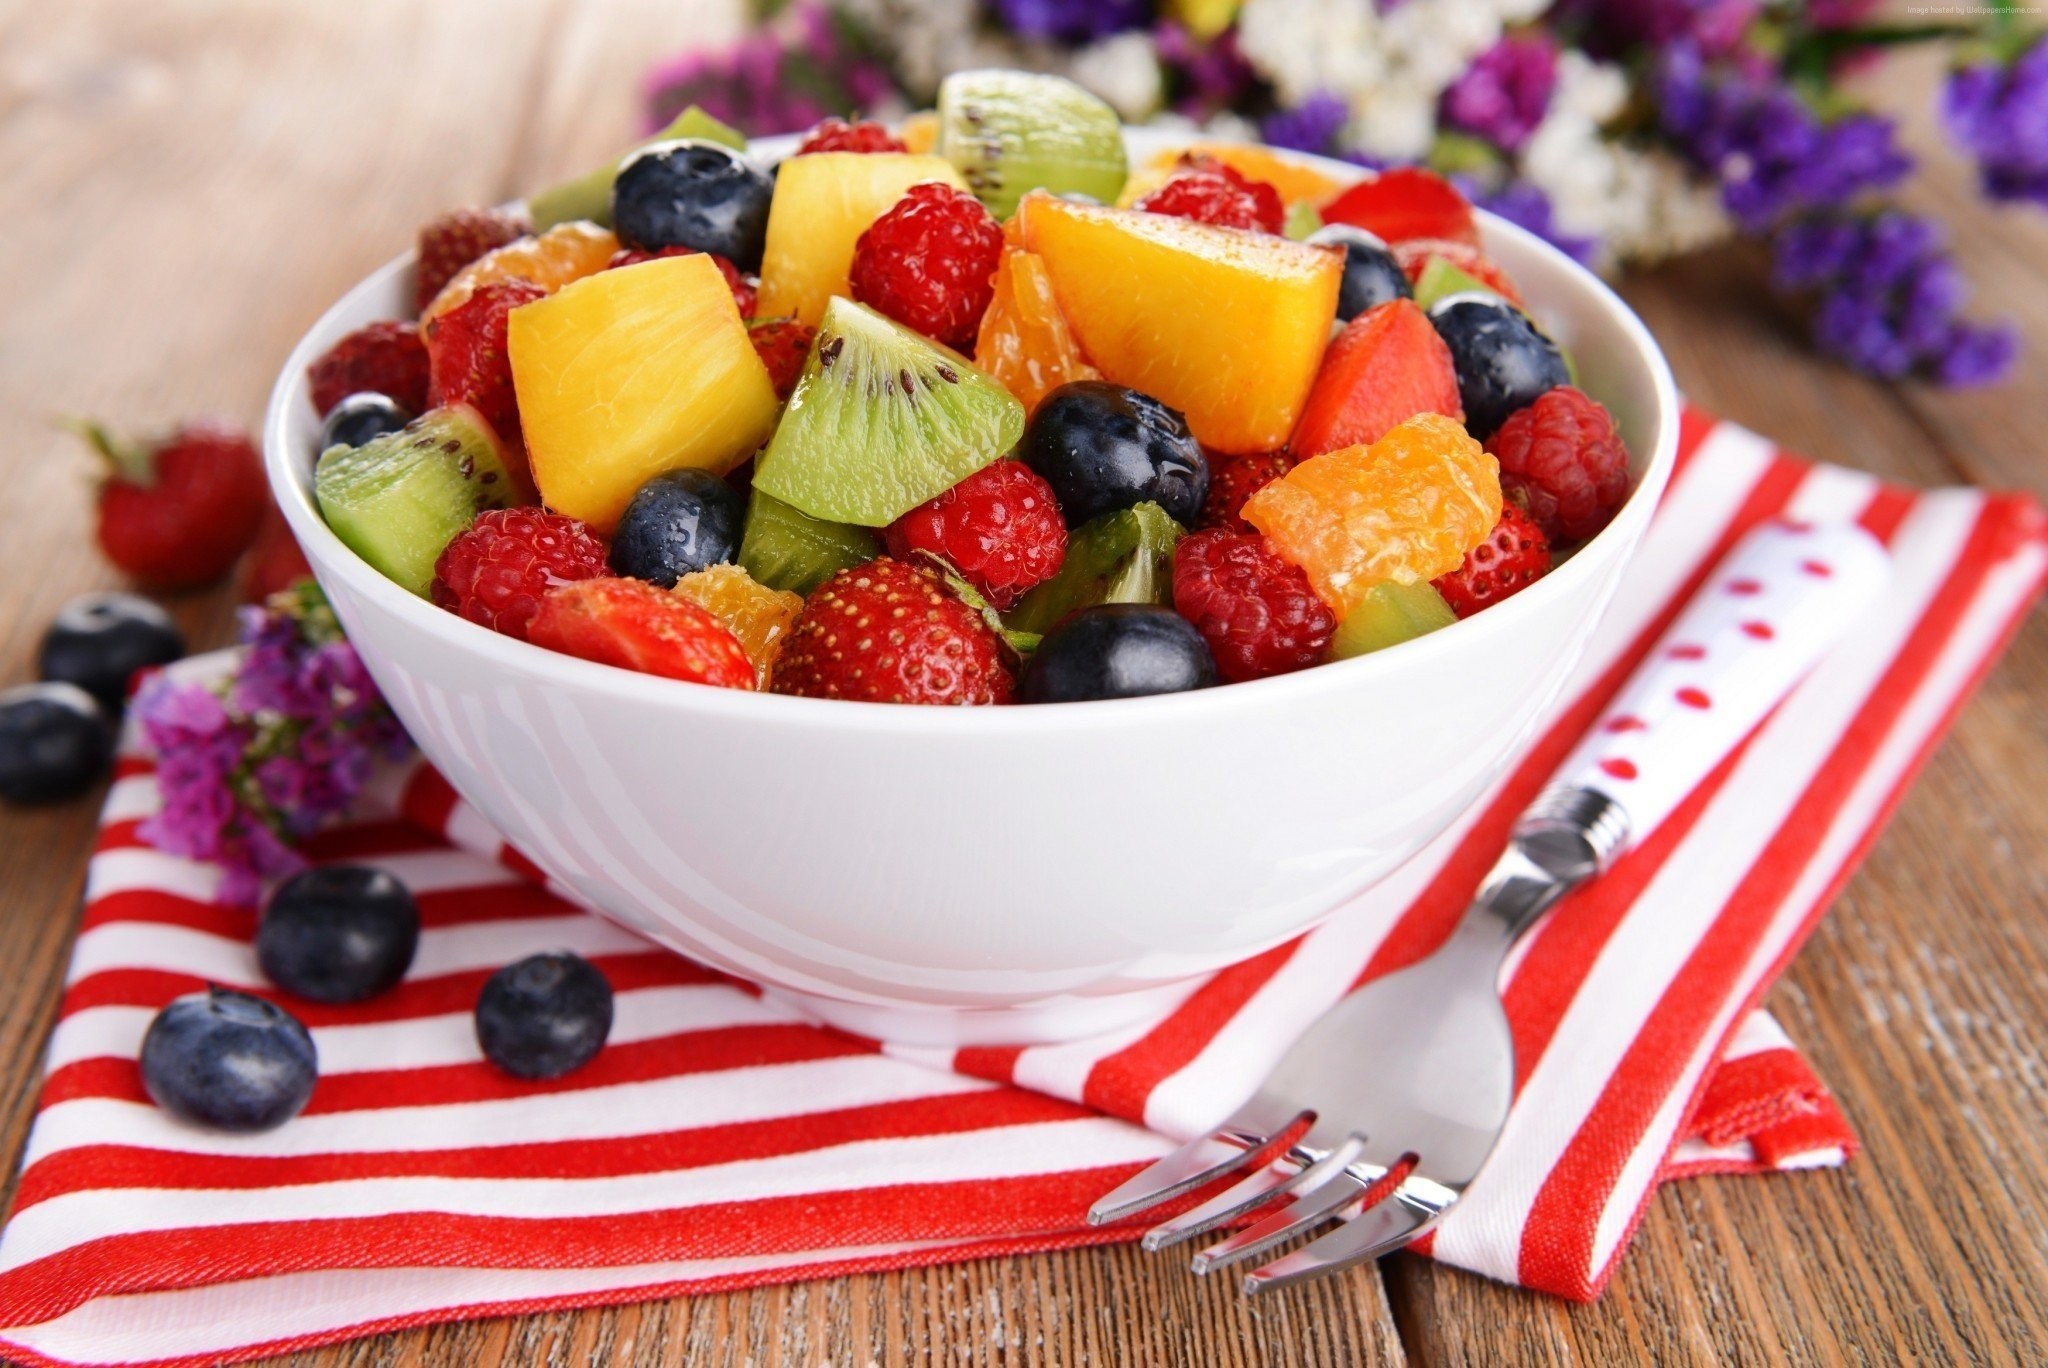 115909-salad-fruits-raspberries-strawberries-blueberries-grapes-kiwi-mango-orange.jpg